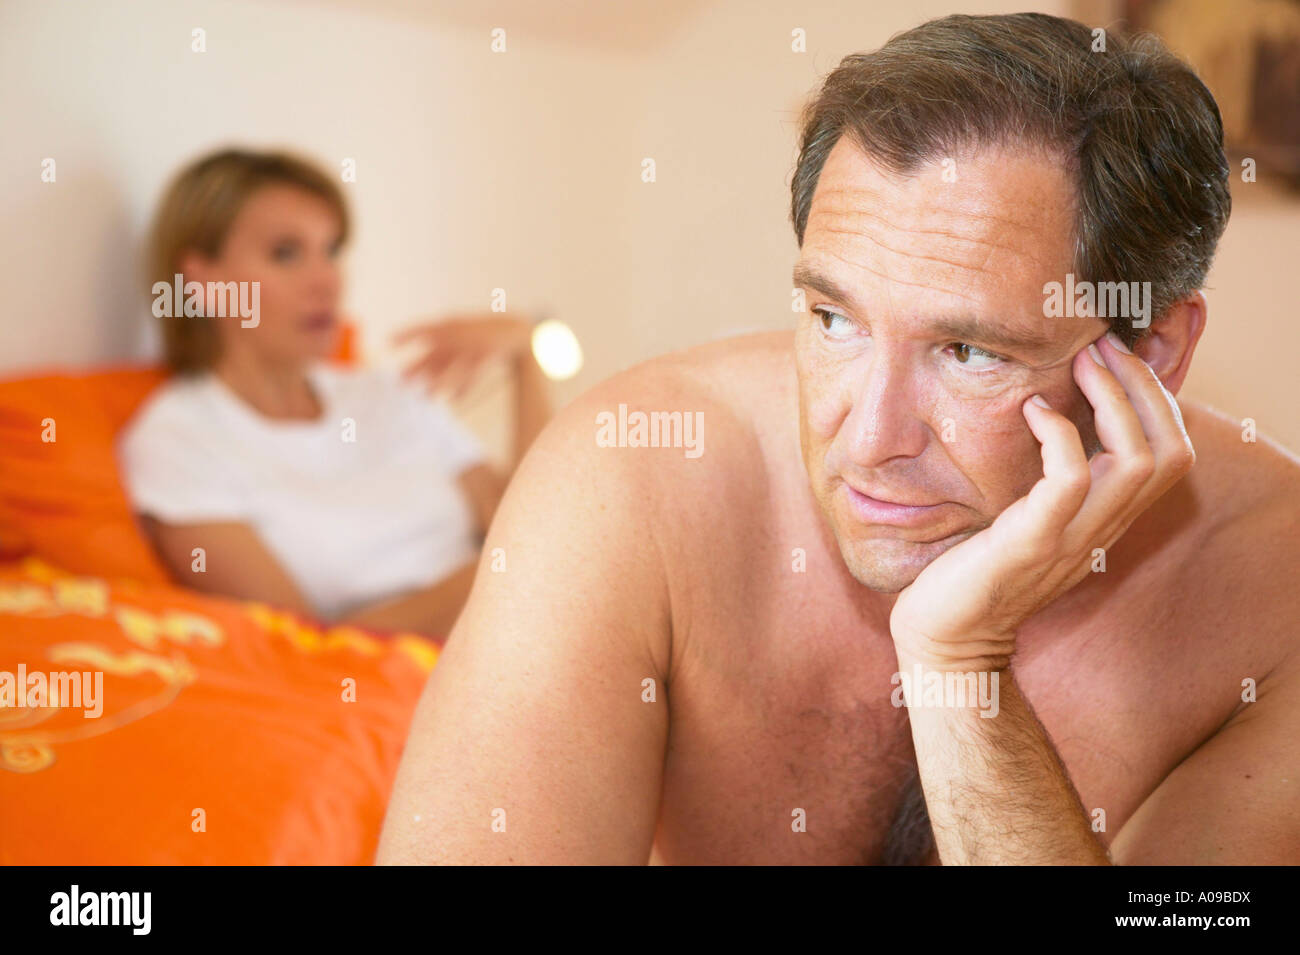 Paar streitet sich im Bett Ehekrise, couple arguing in bed marriage crisis Stock Photo